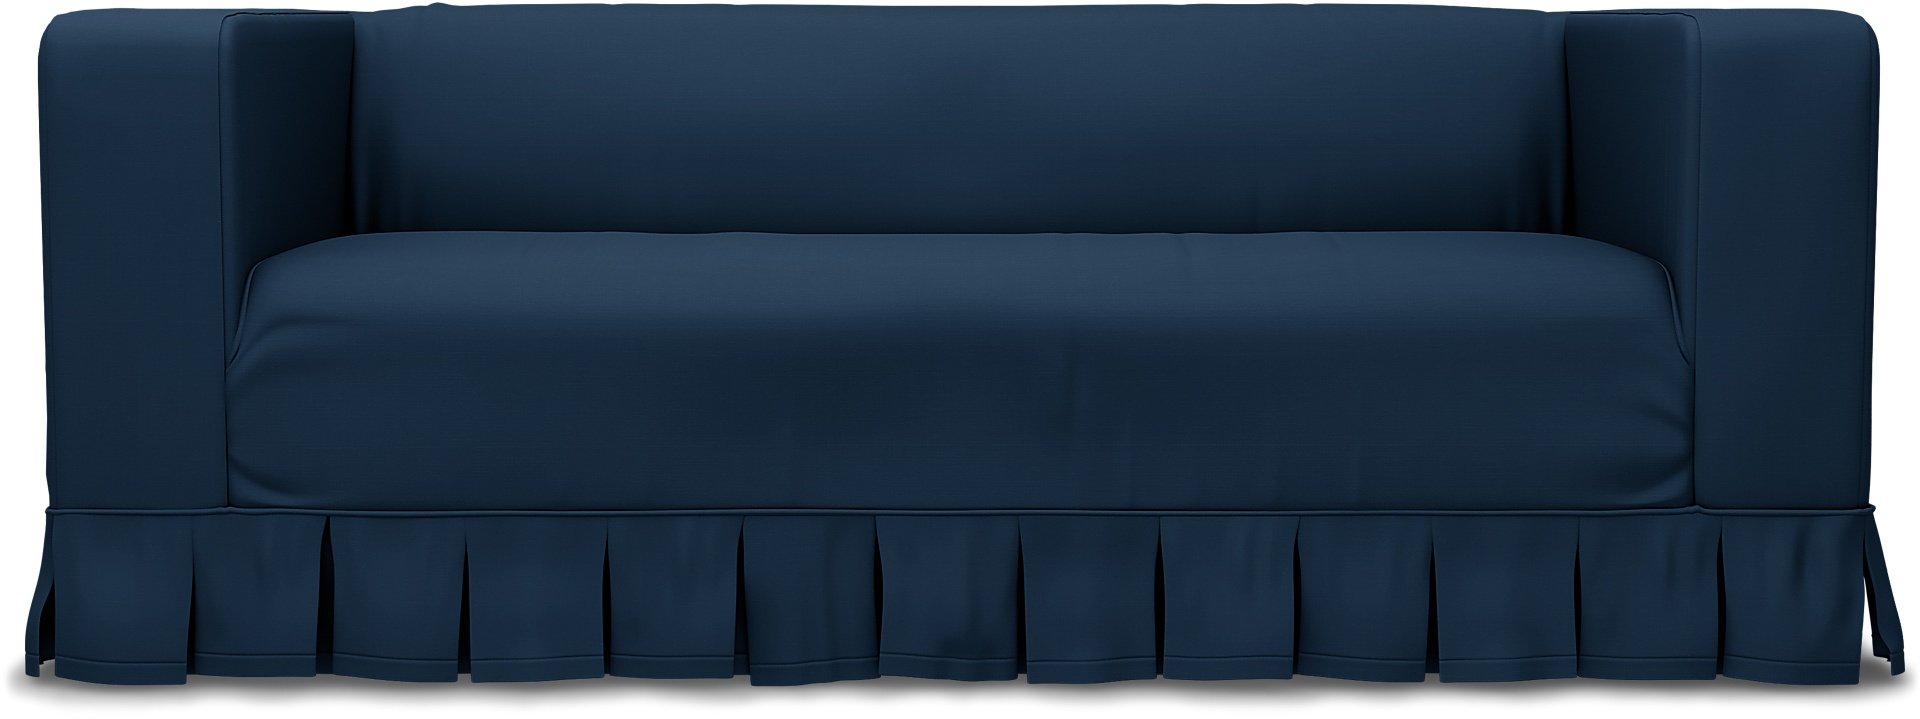 IKEA - Klippan 2 Seater Sofa Cover, Deep Navy Blue, Cotton - Bemz